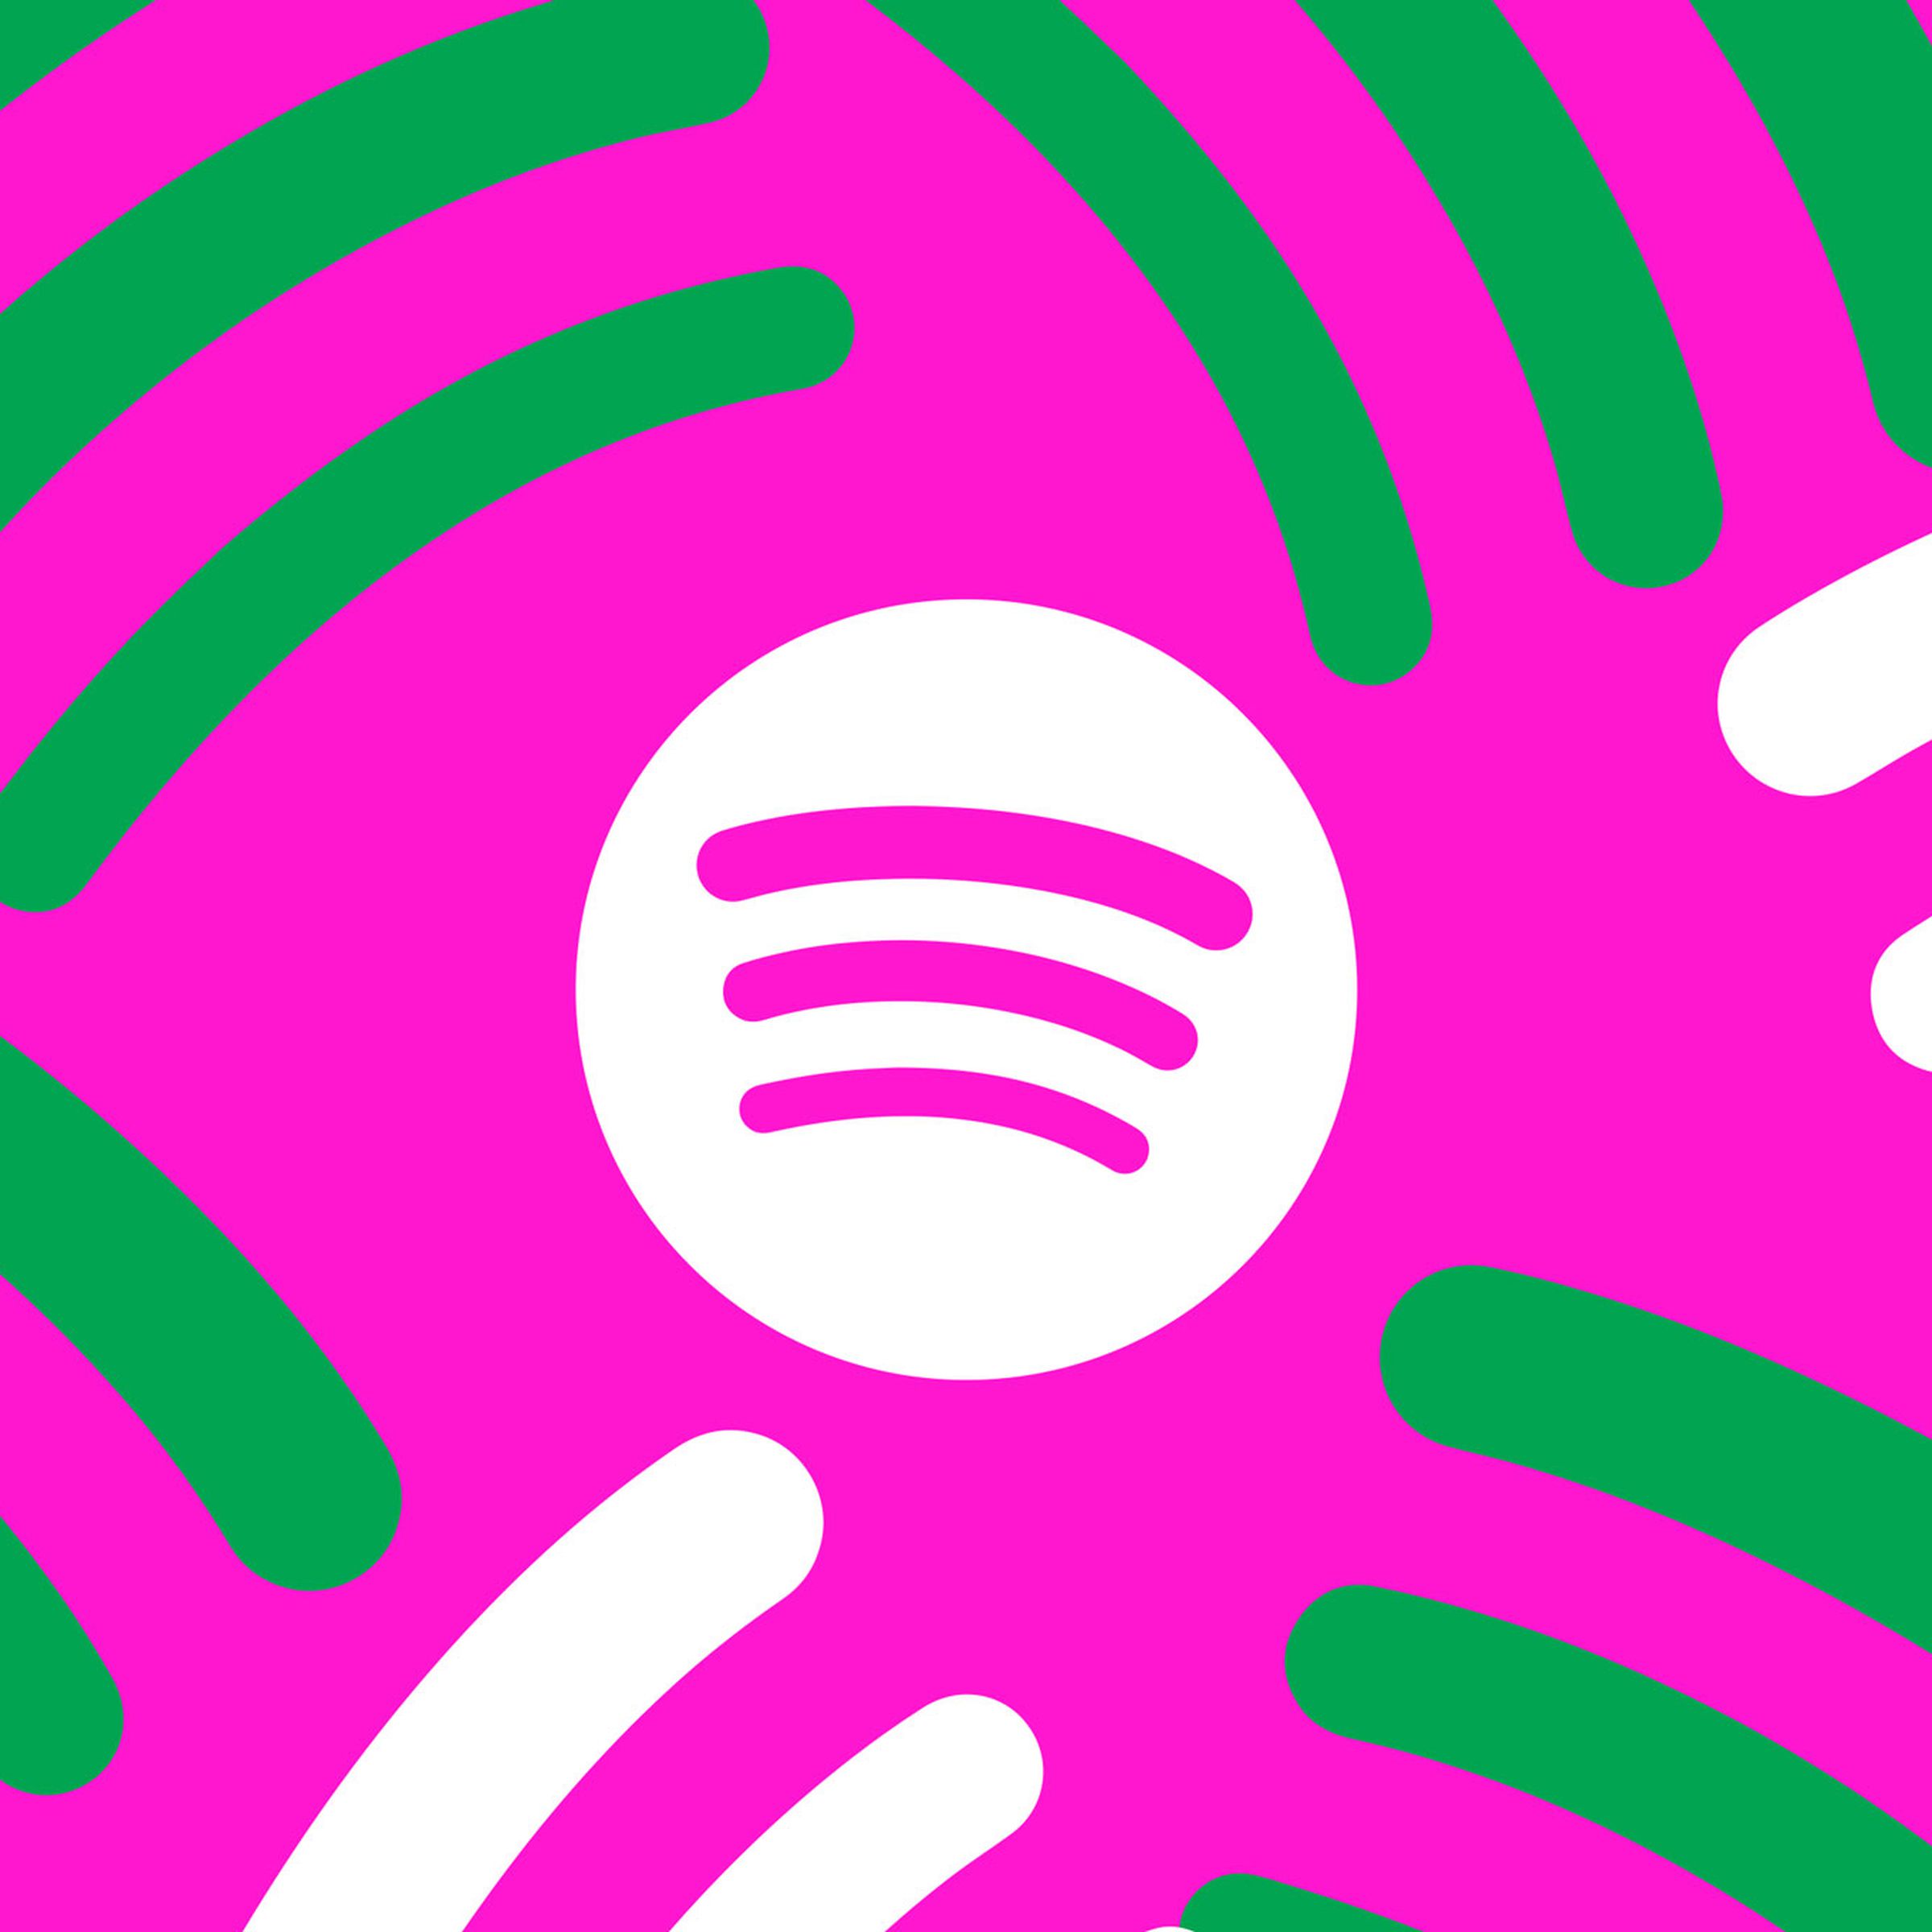 An illustration of the Spotify app logo